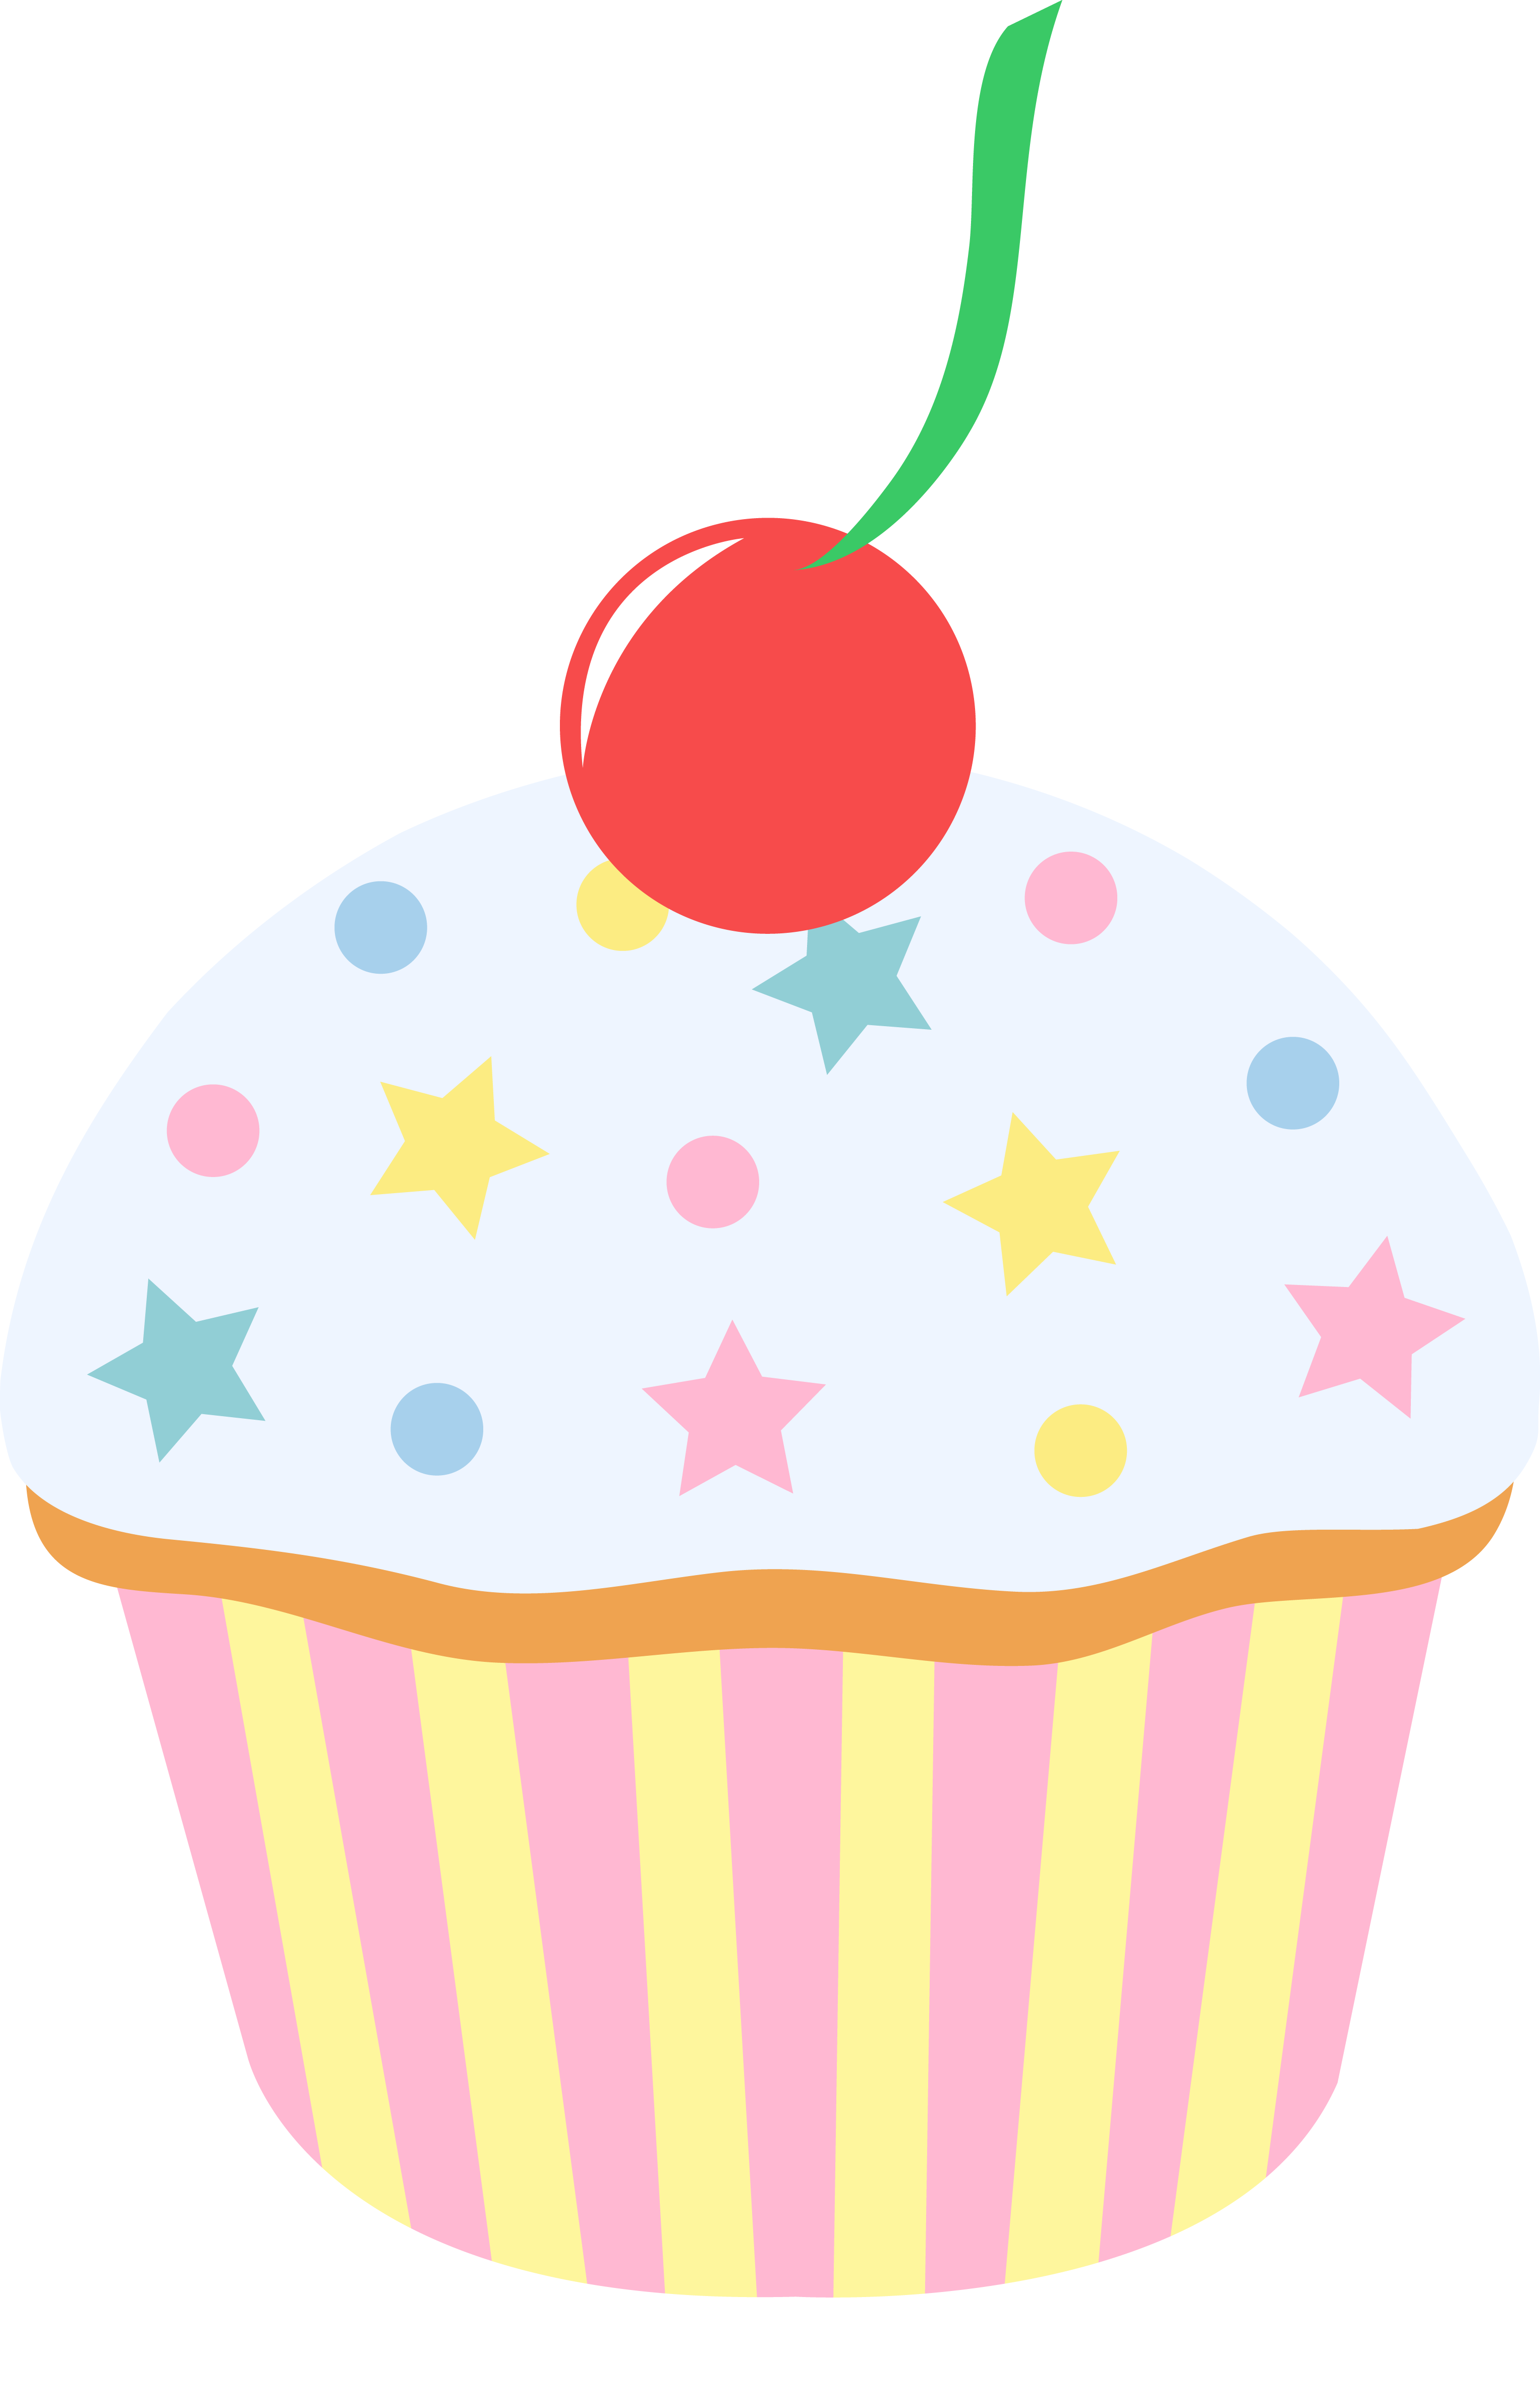 Images For > Cute Cupcake Cartoon